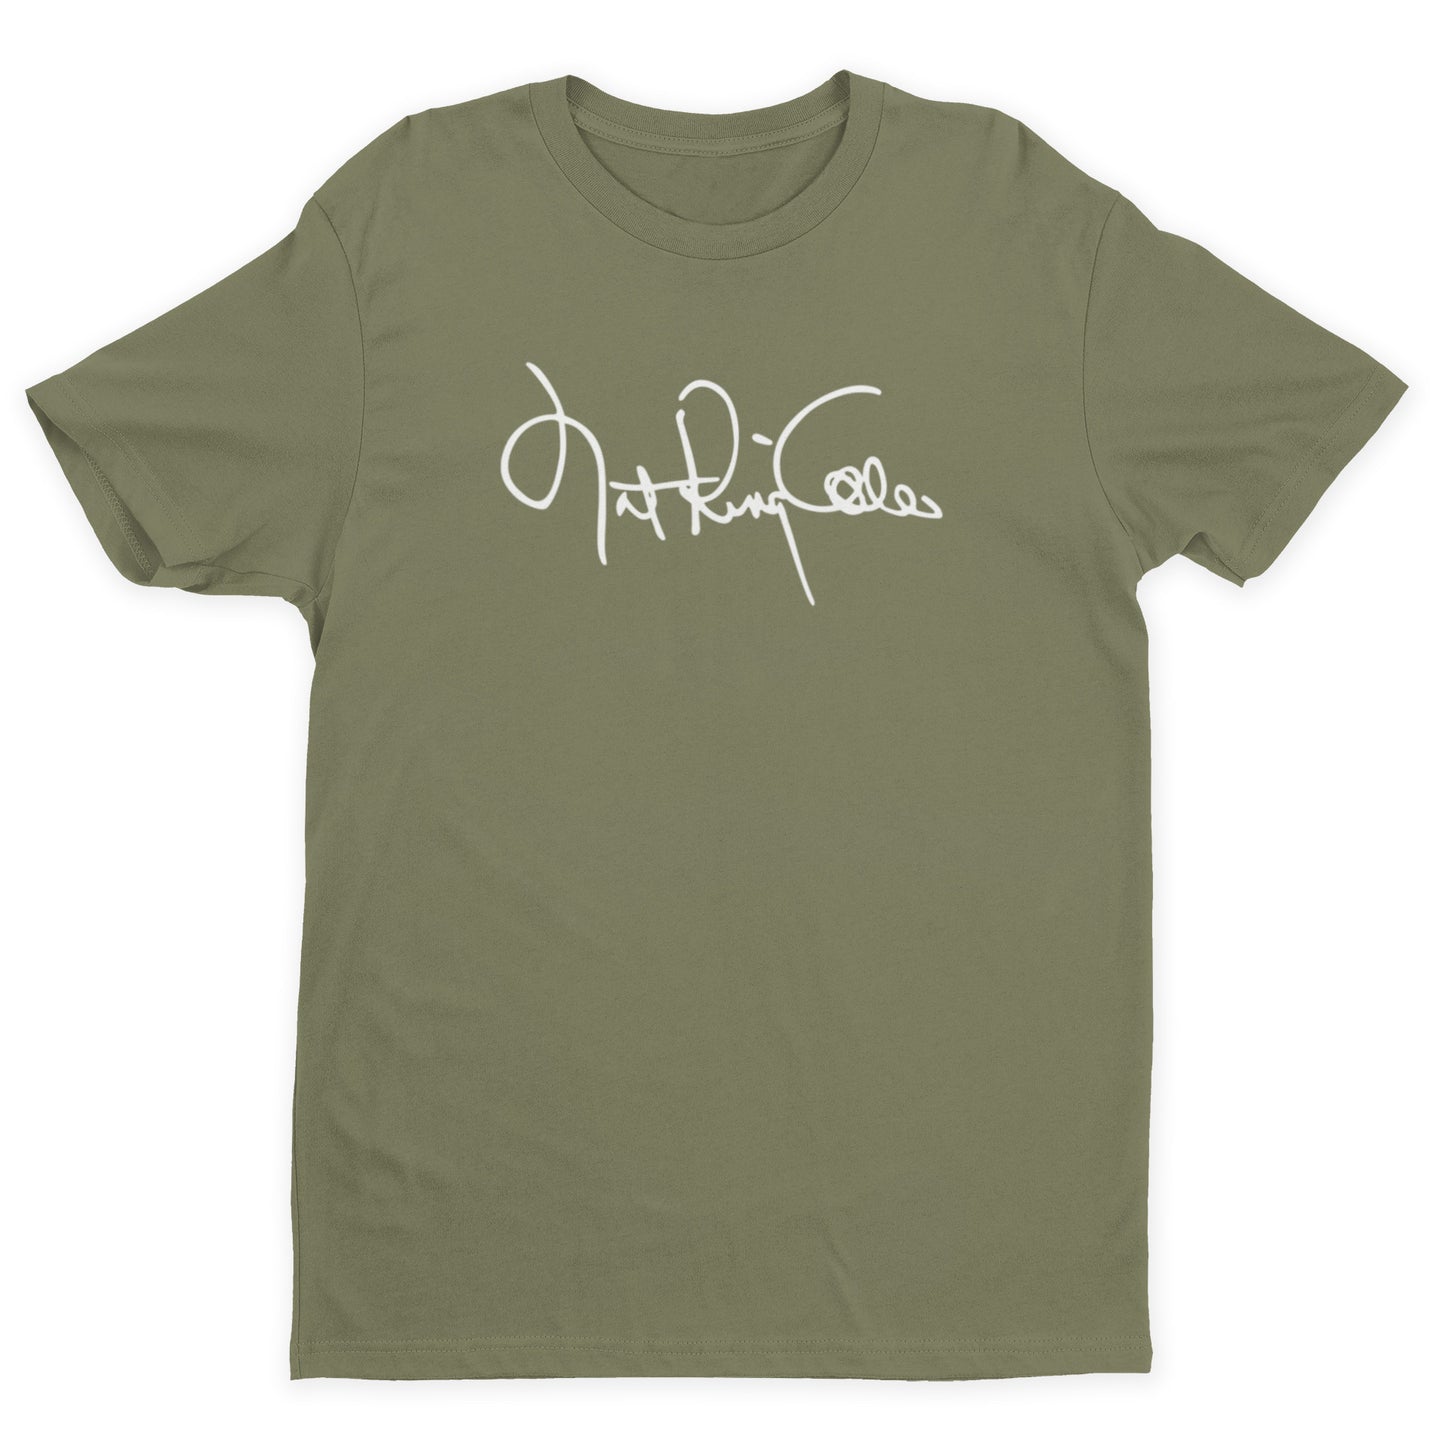 Nat King Cole Signature T-Shirt - Olive